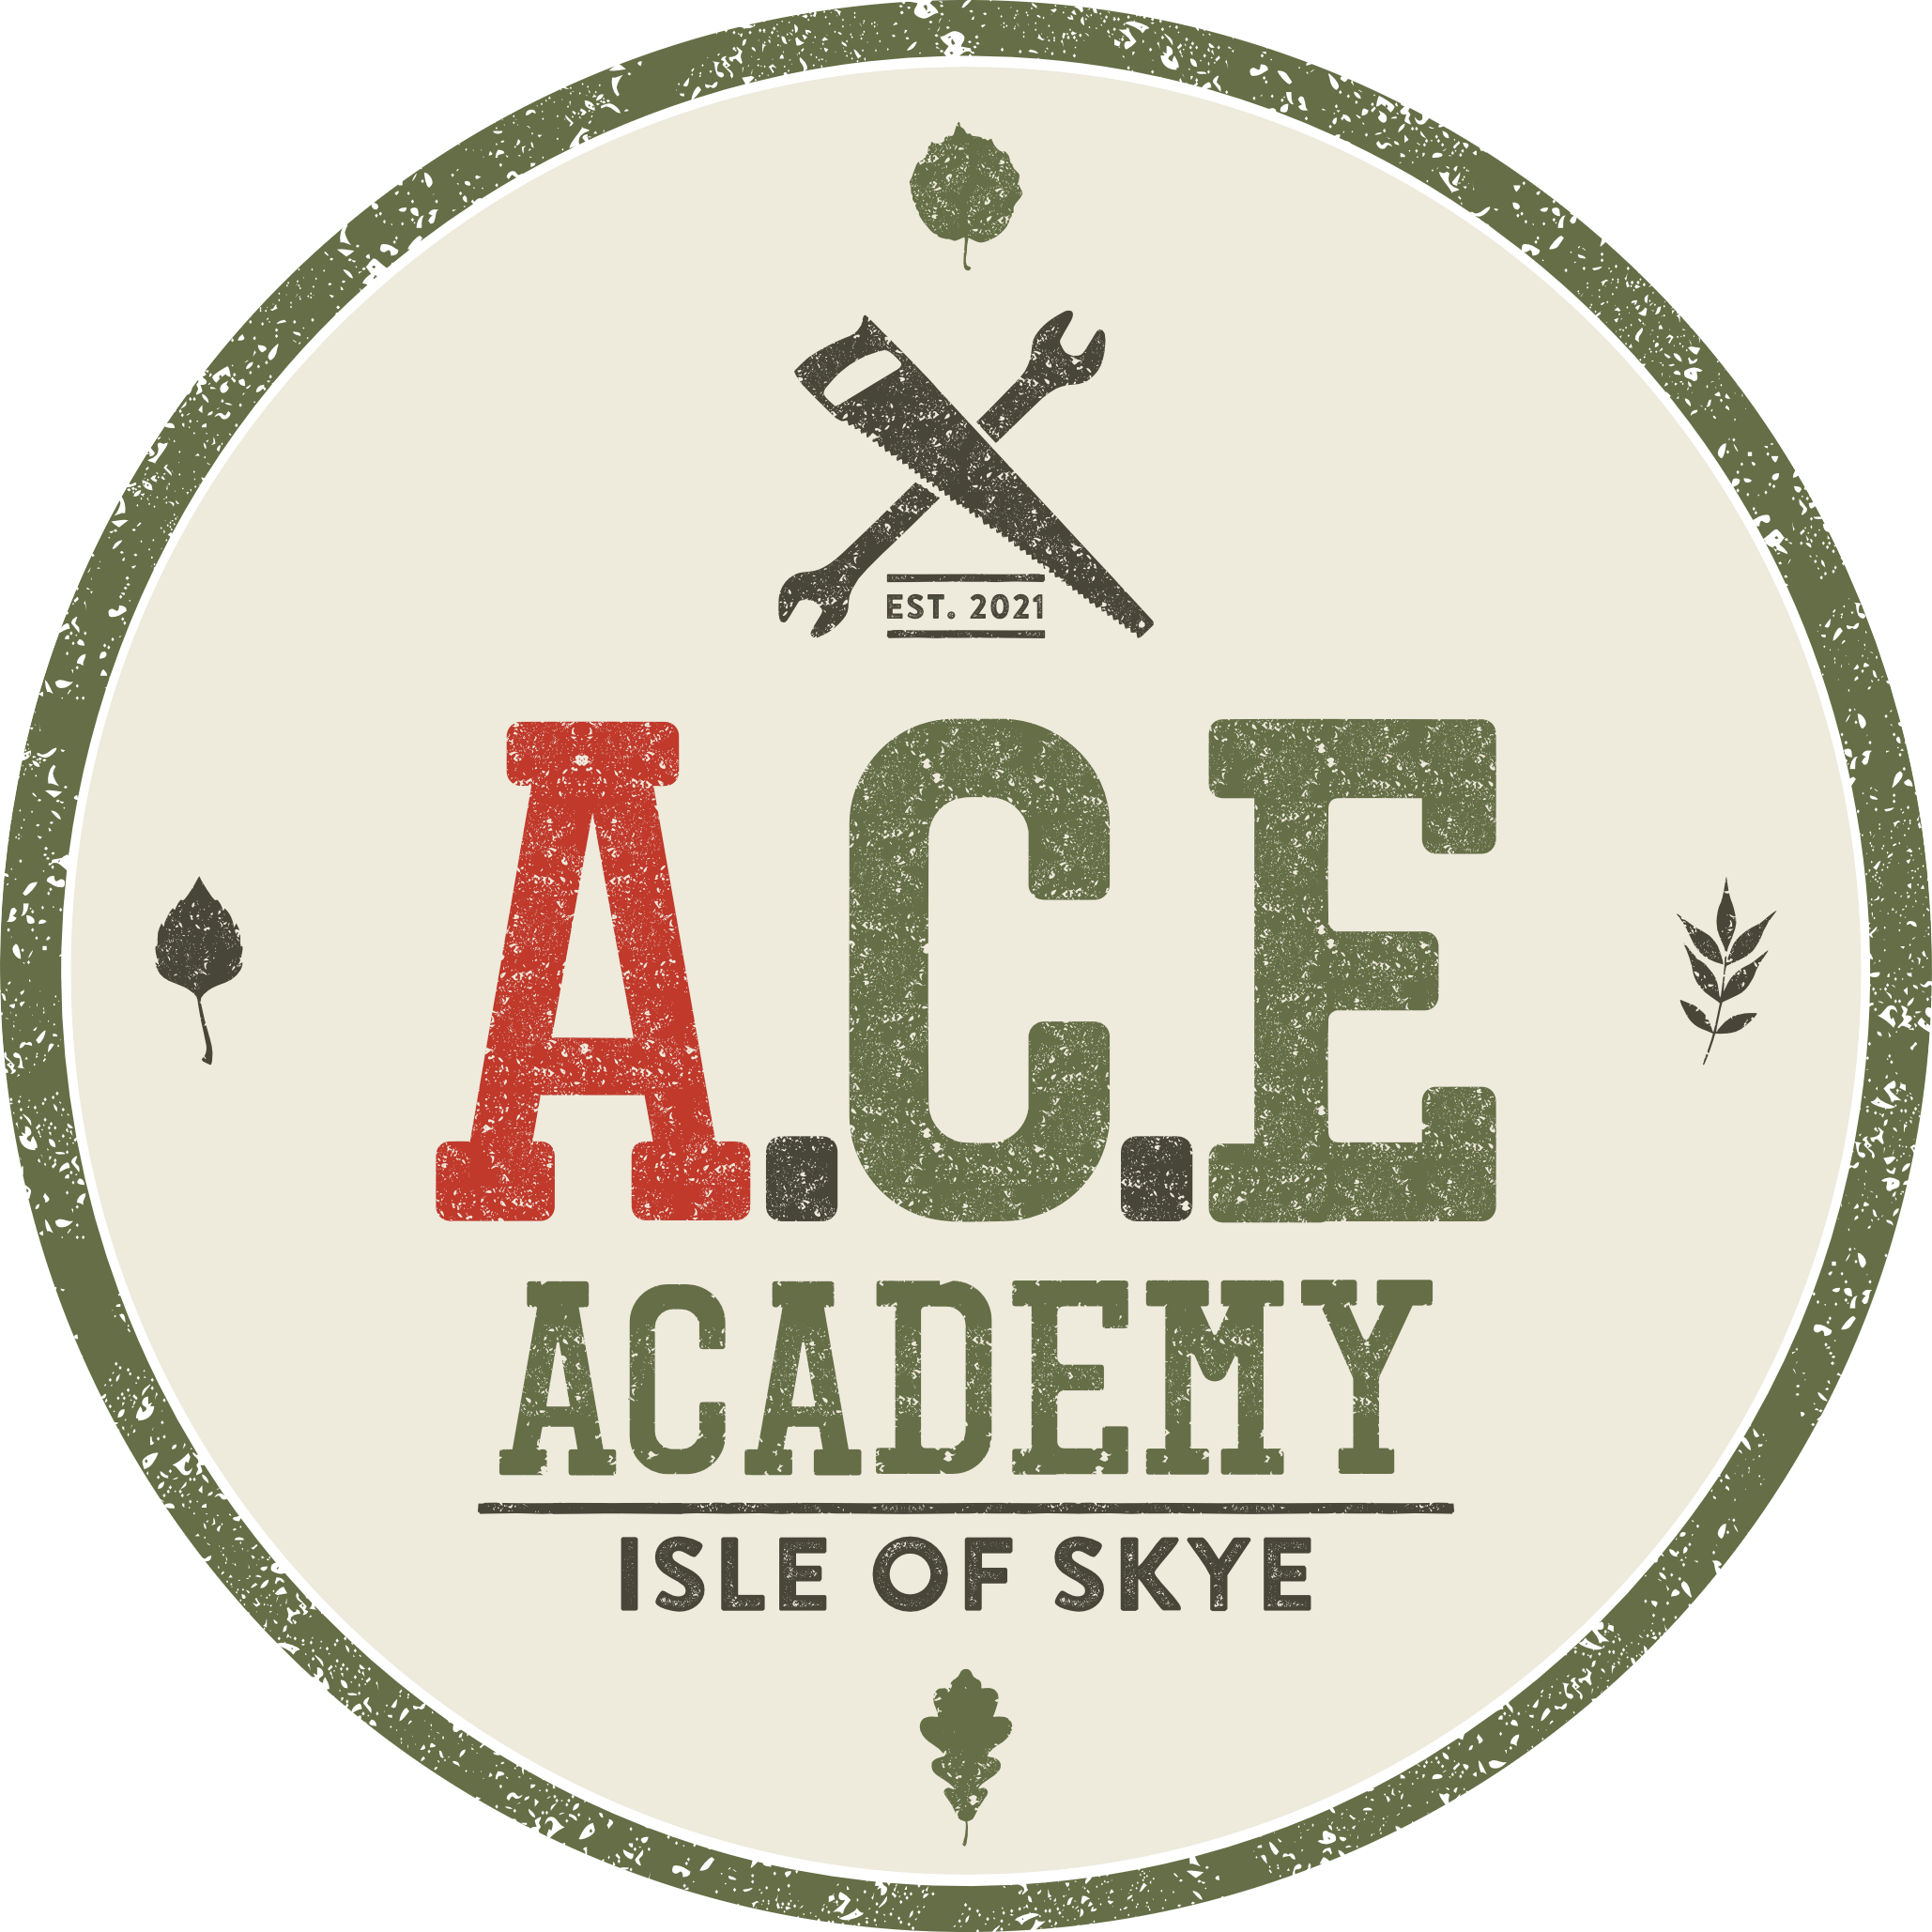 A.C.E Academy, Adventure Conservation Education, Isle of Skye